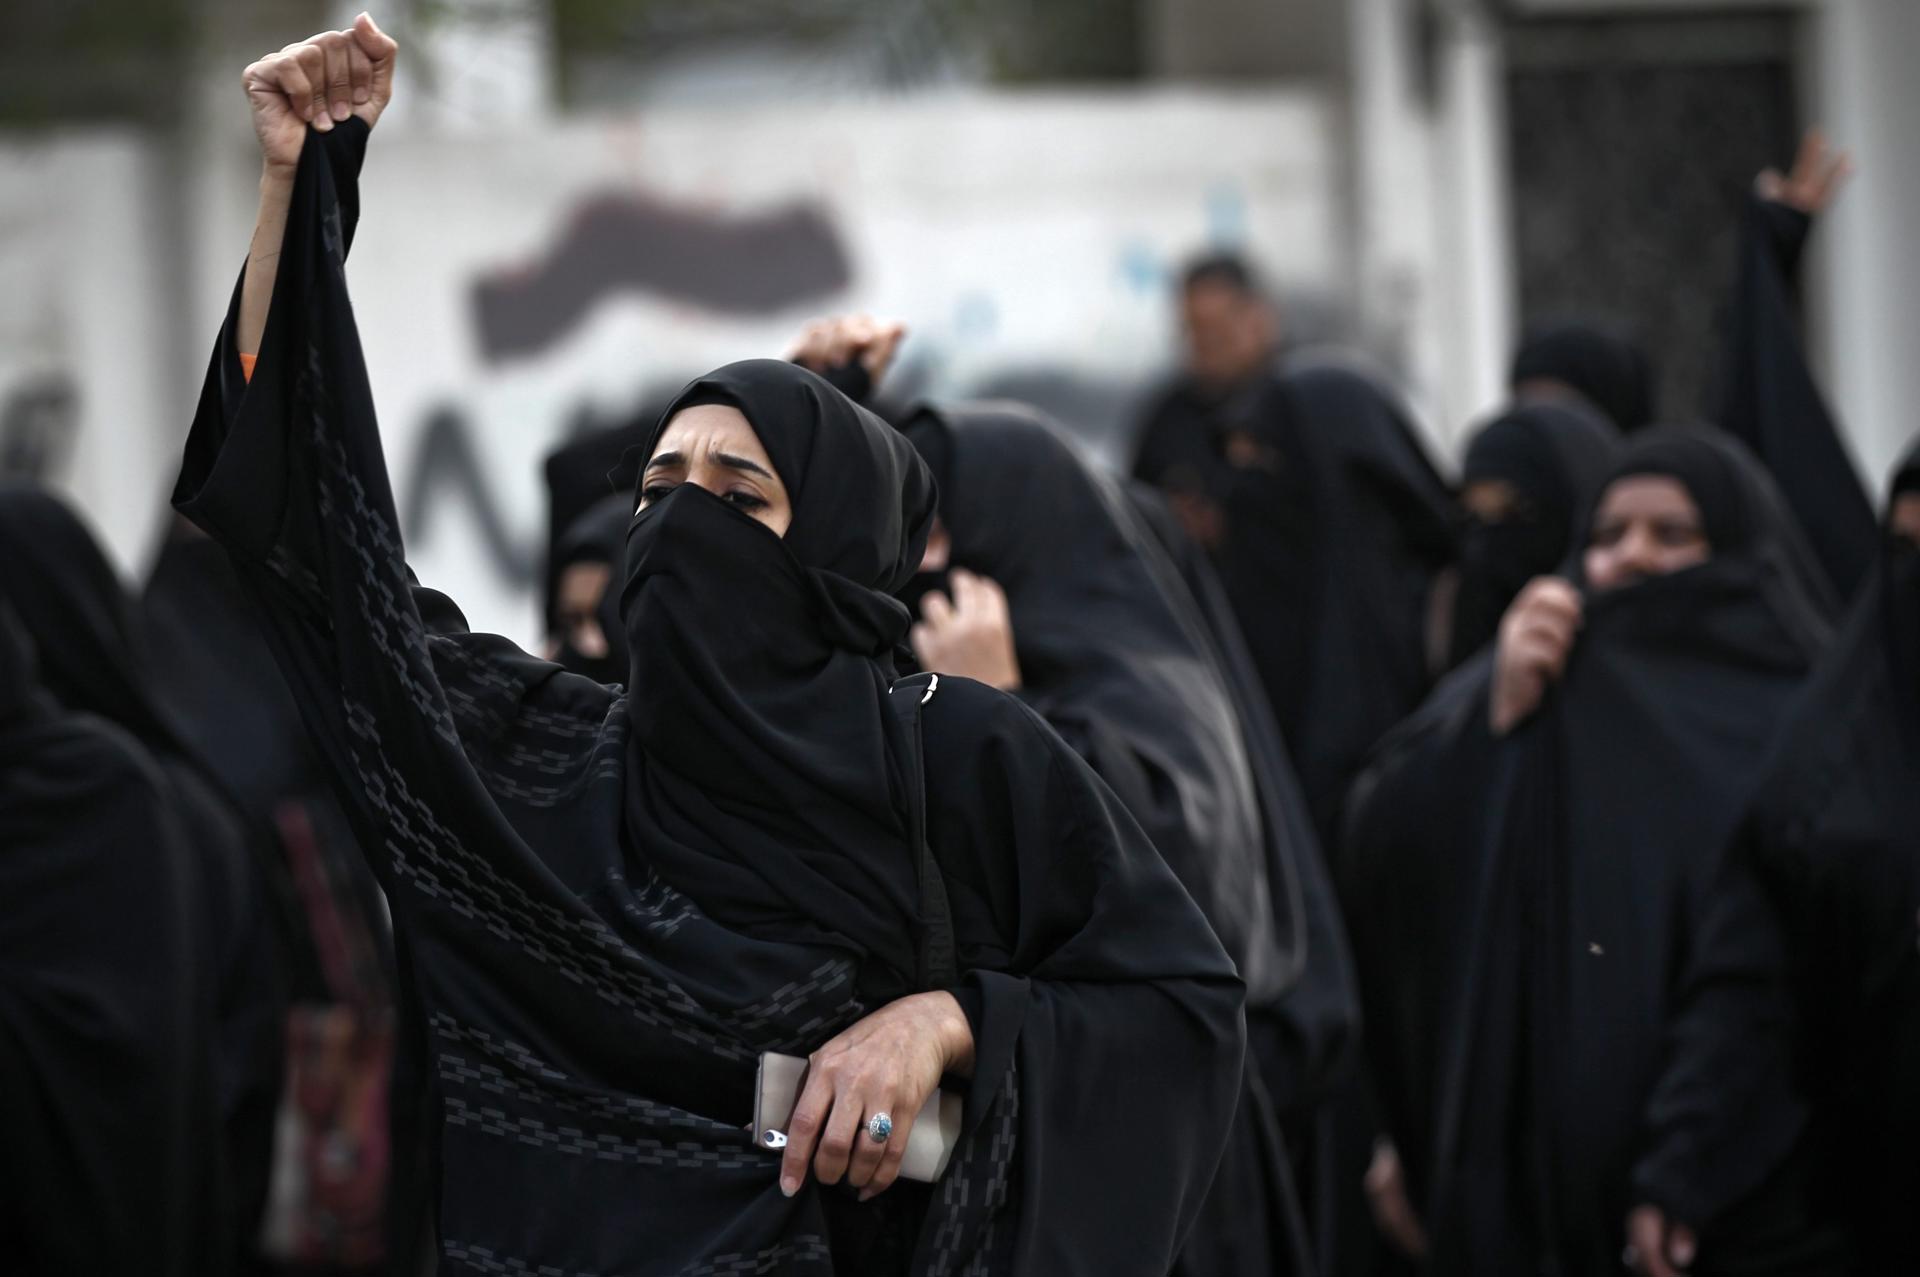 Women shout slogans during a demonstration in Bahrain after Saudi Arabia executed prominent Saudi Shiite cleric Sheikh Nimr al-Nimr, in Manama, Bahrain, 02 January 2016. EFE/EPA/FILE/AHMED ALFARDAN